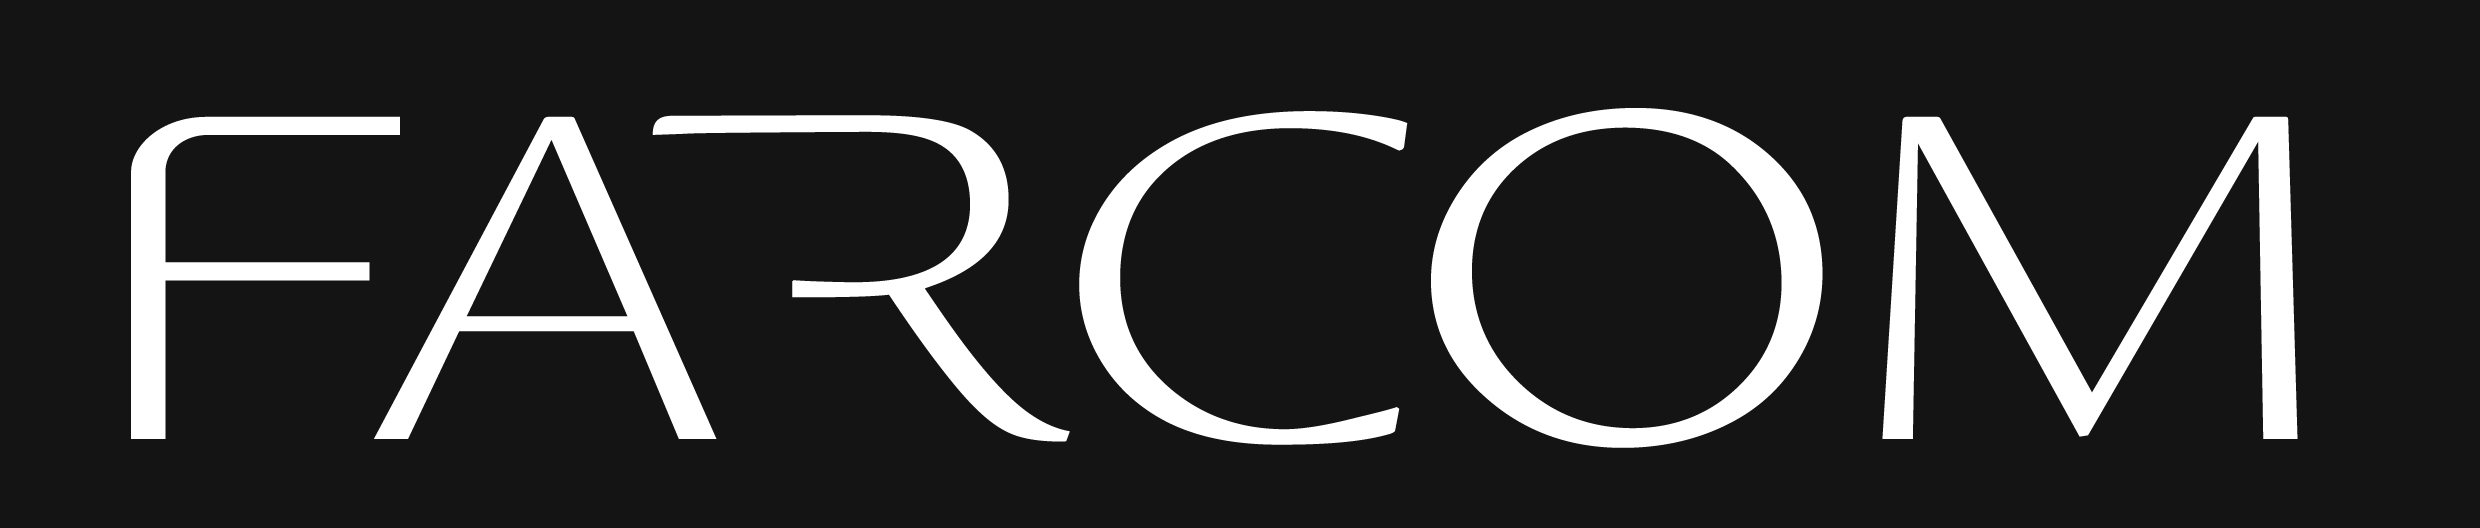 Farcom logo black